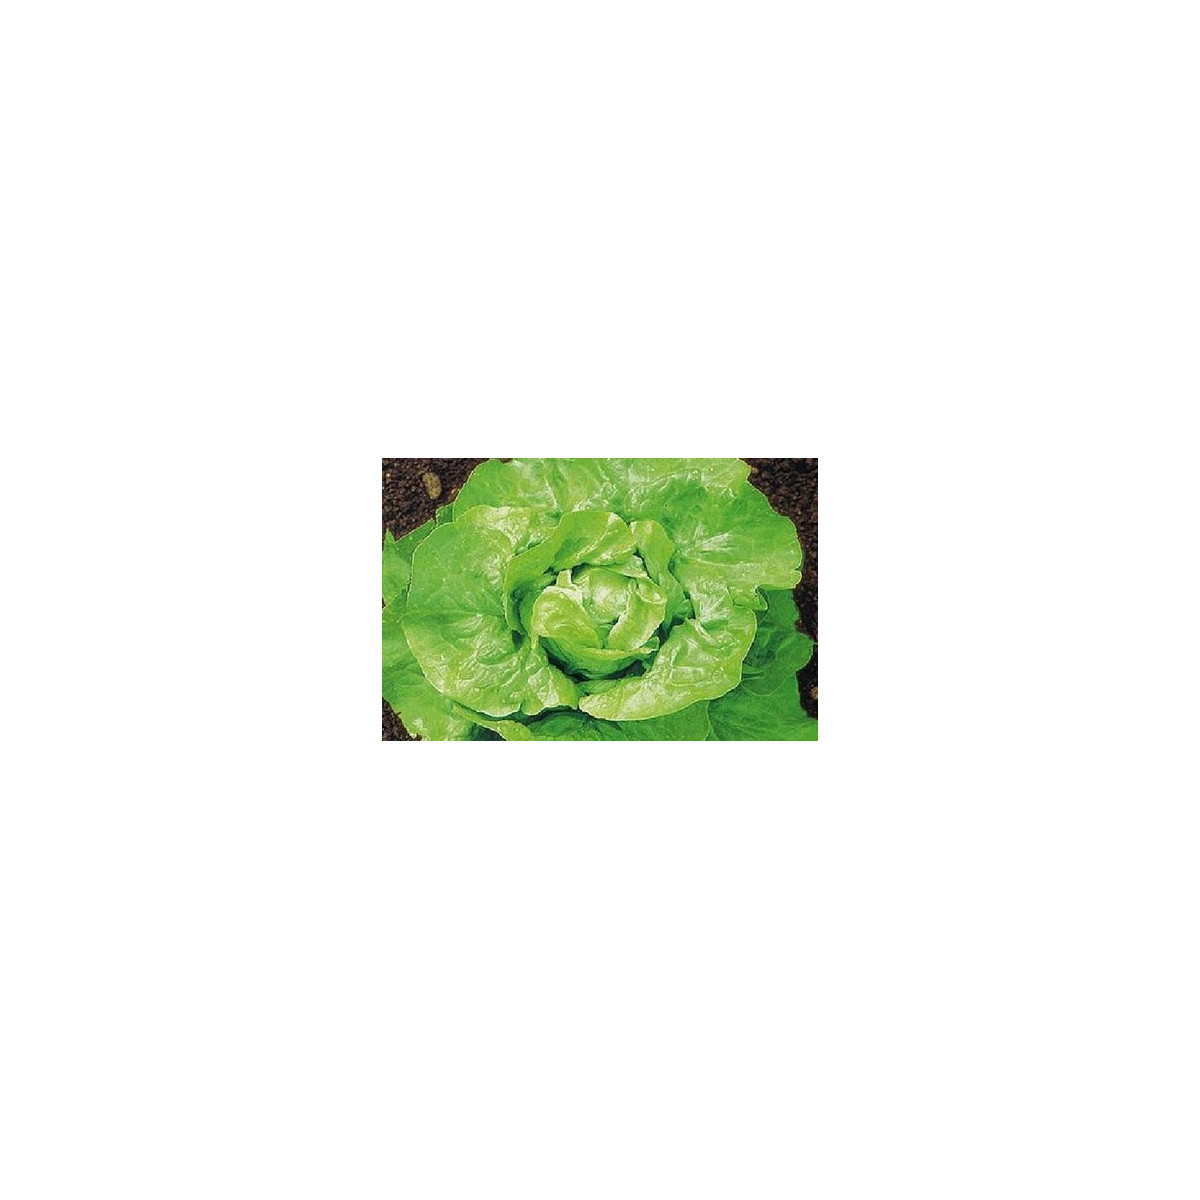 Salát hlávkový k rychlení - Lactusa sativa - semena salátu - 300 ks